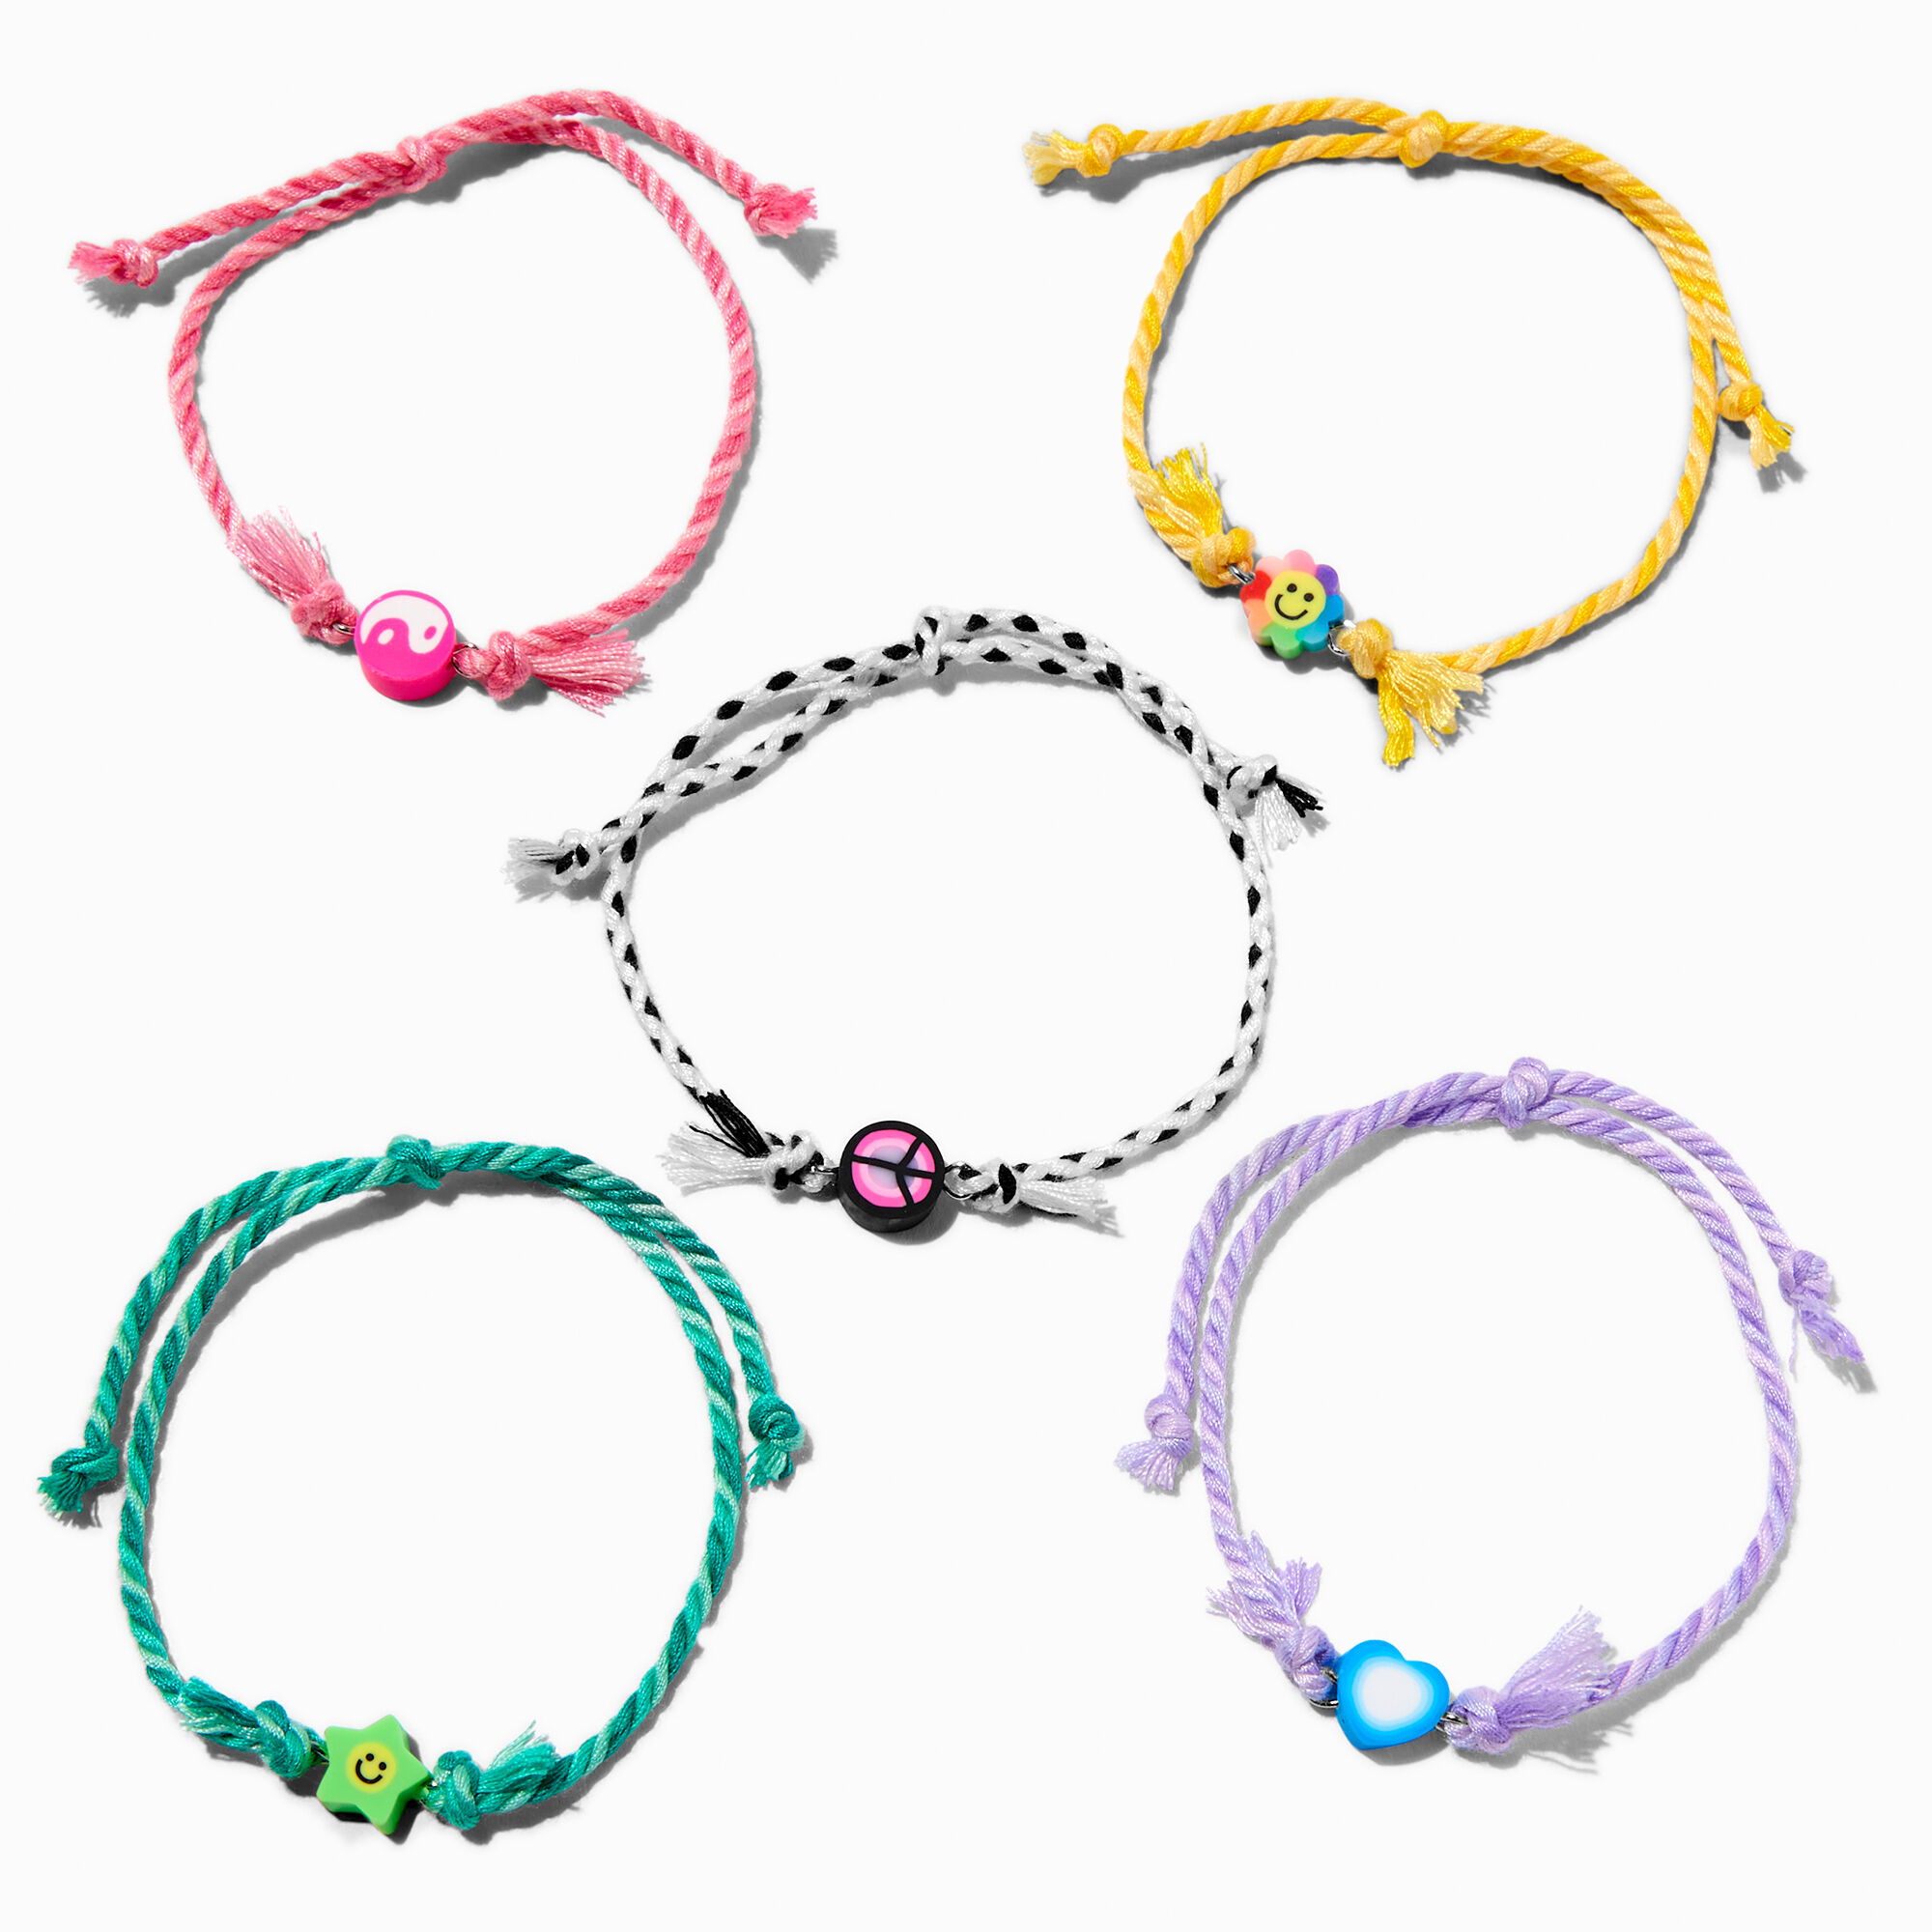 View Claires Peace Love Adjustable Woven Bracelet Set 5 Pack Rainbow information